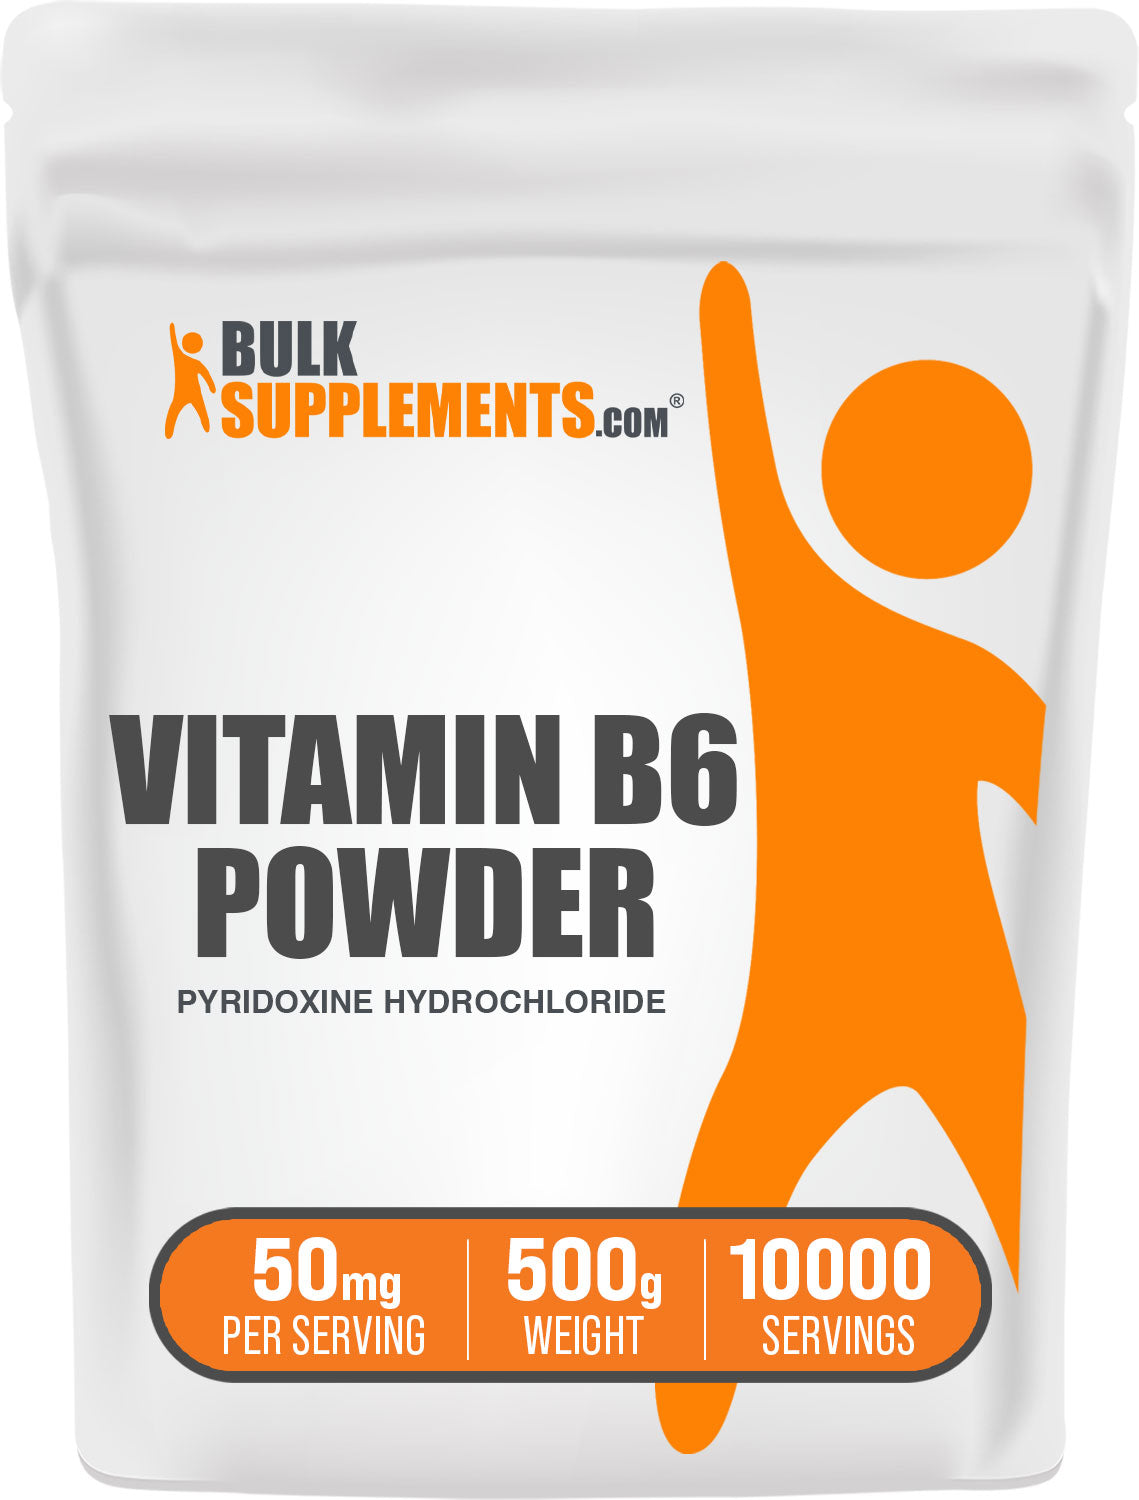 BulkSupplements Vitamin B6 Powder Pyridoxine Hydrochloride 500g bag